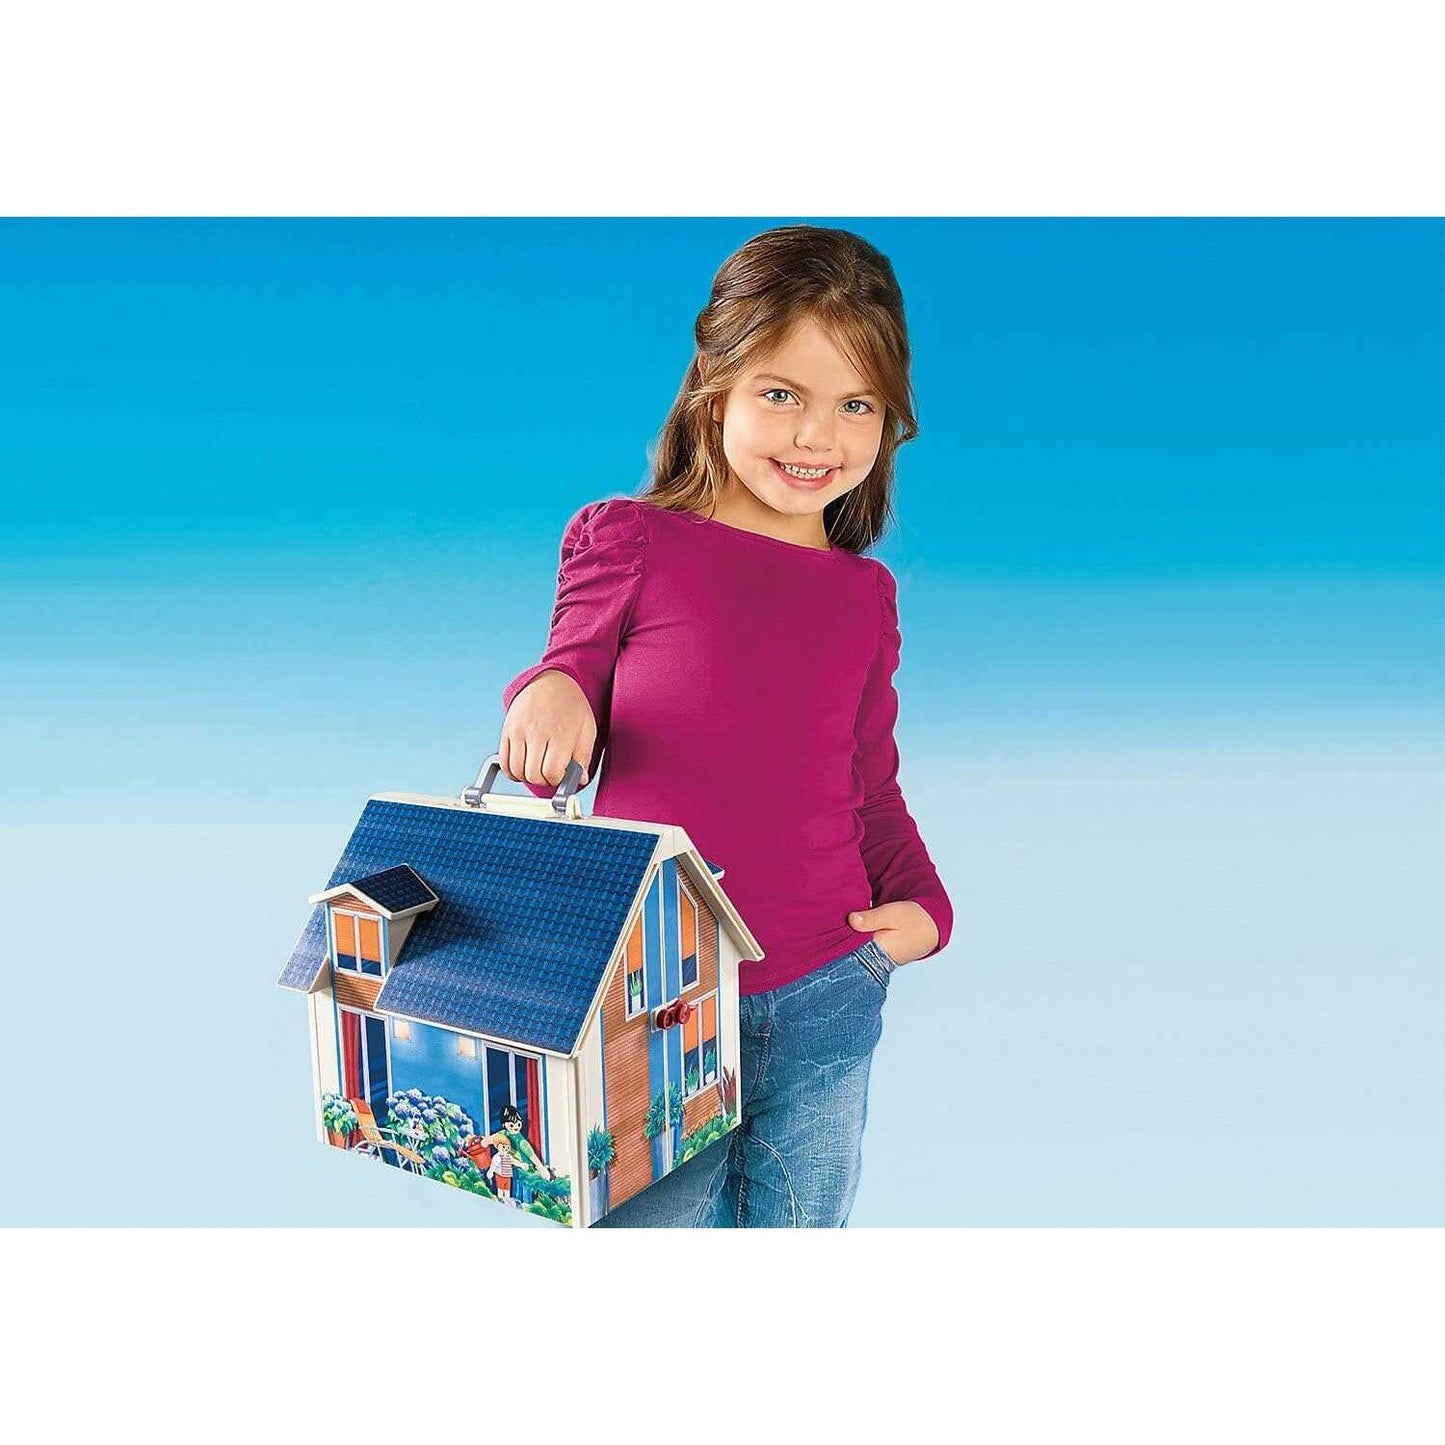 Toys N Tuck:Playmobil 70985 Take Along Dollhouse,Playmobil